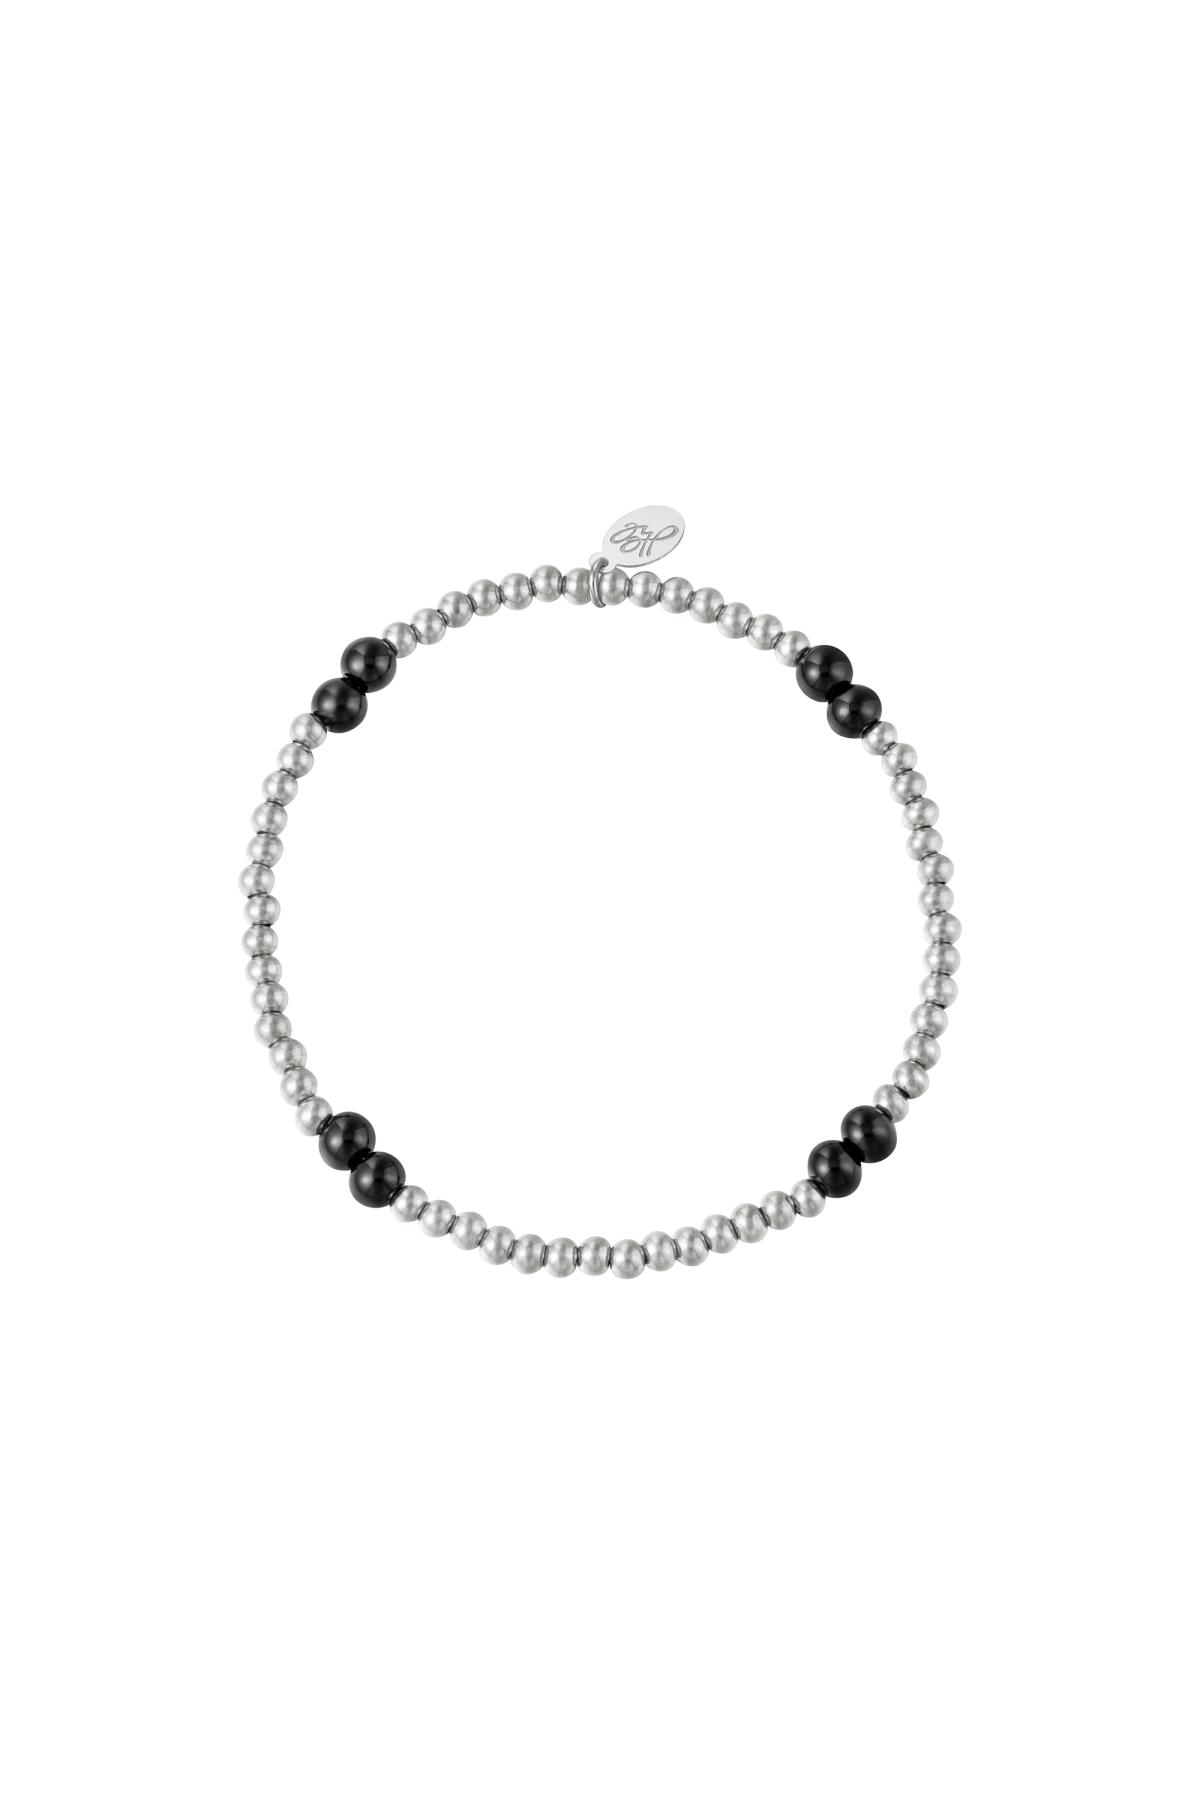 Bracelet Black Pearl Silver Stainless Steel